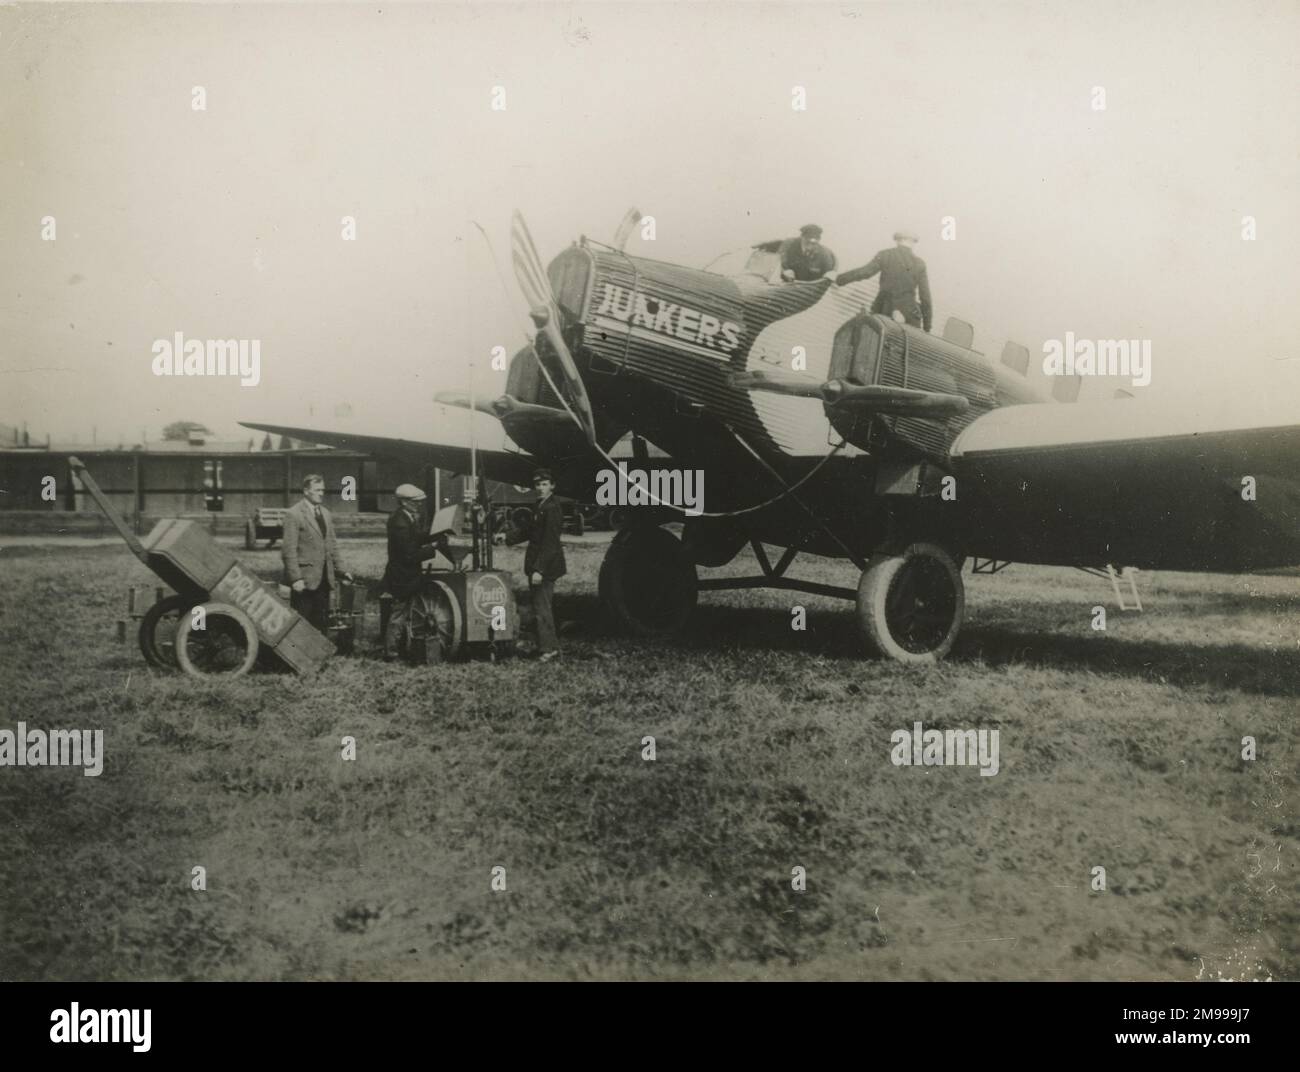 Junkers G24. La leyenda manuscrita en el reverso de la fotografía dice: ?Junkers alemanes que traen sobre lingotes. Esta fue la primera carga aérea de la deuda de guerra alemana.? Foto de stock